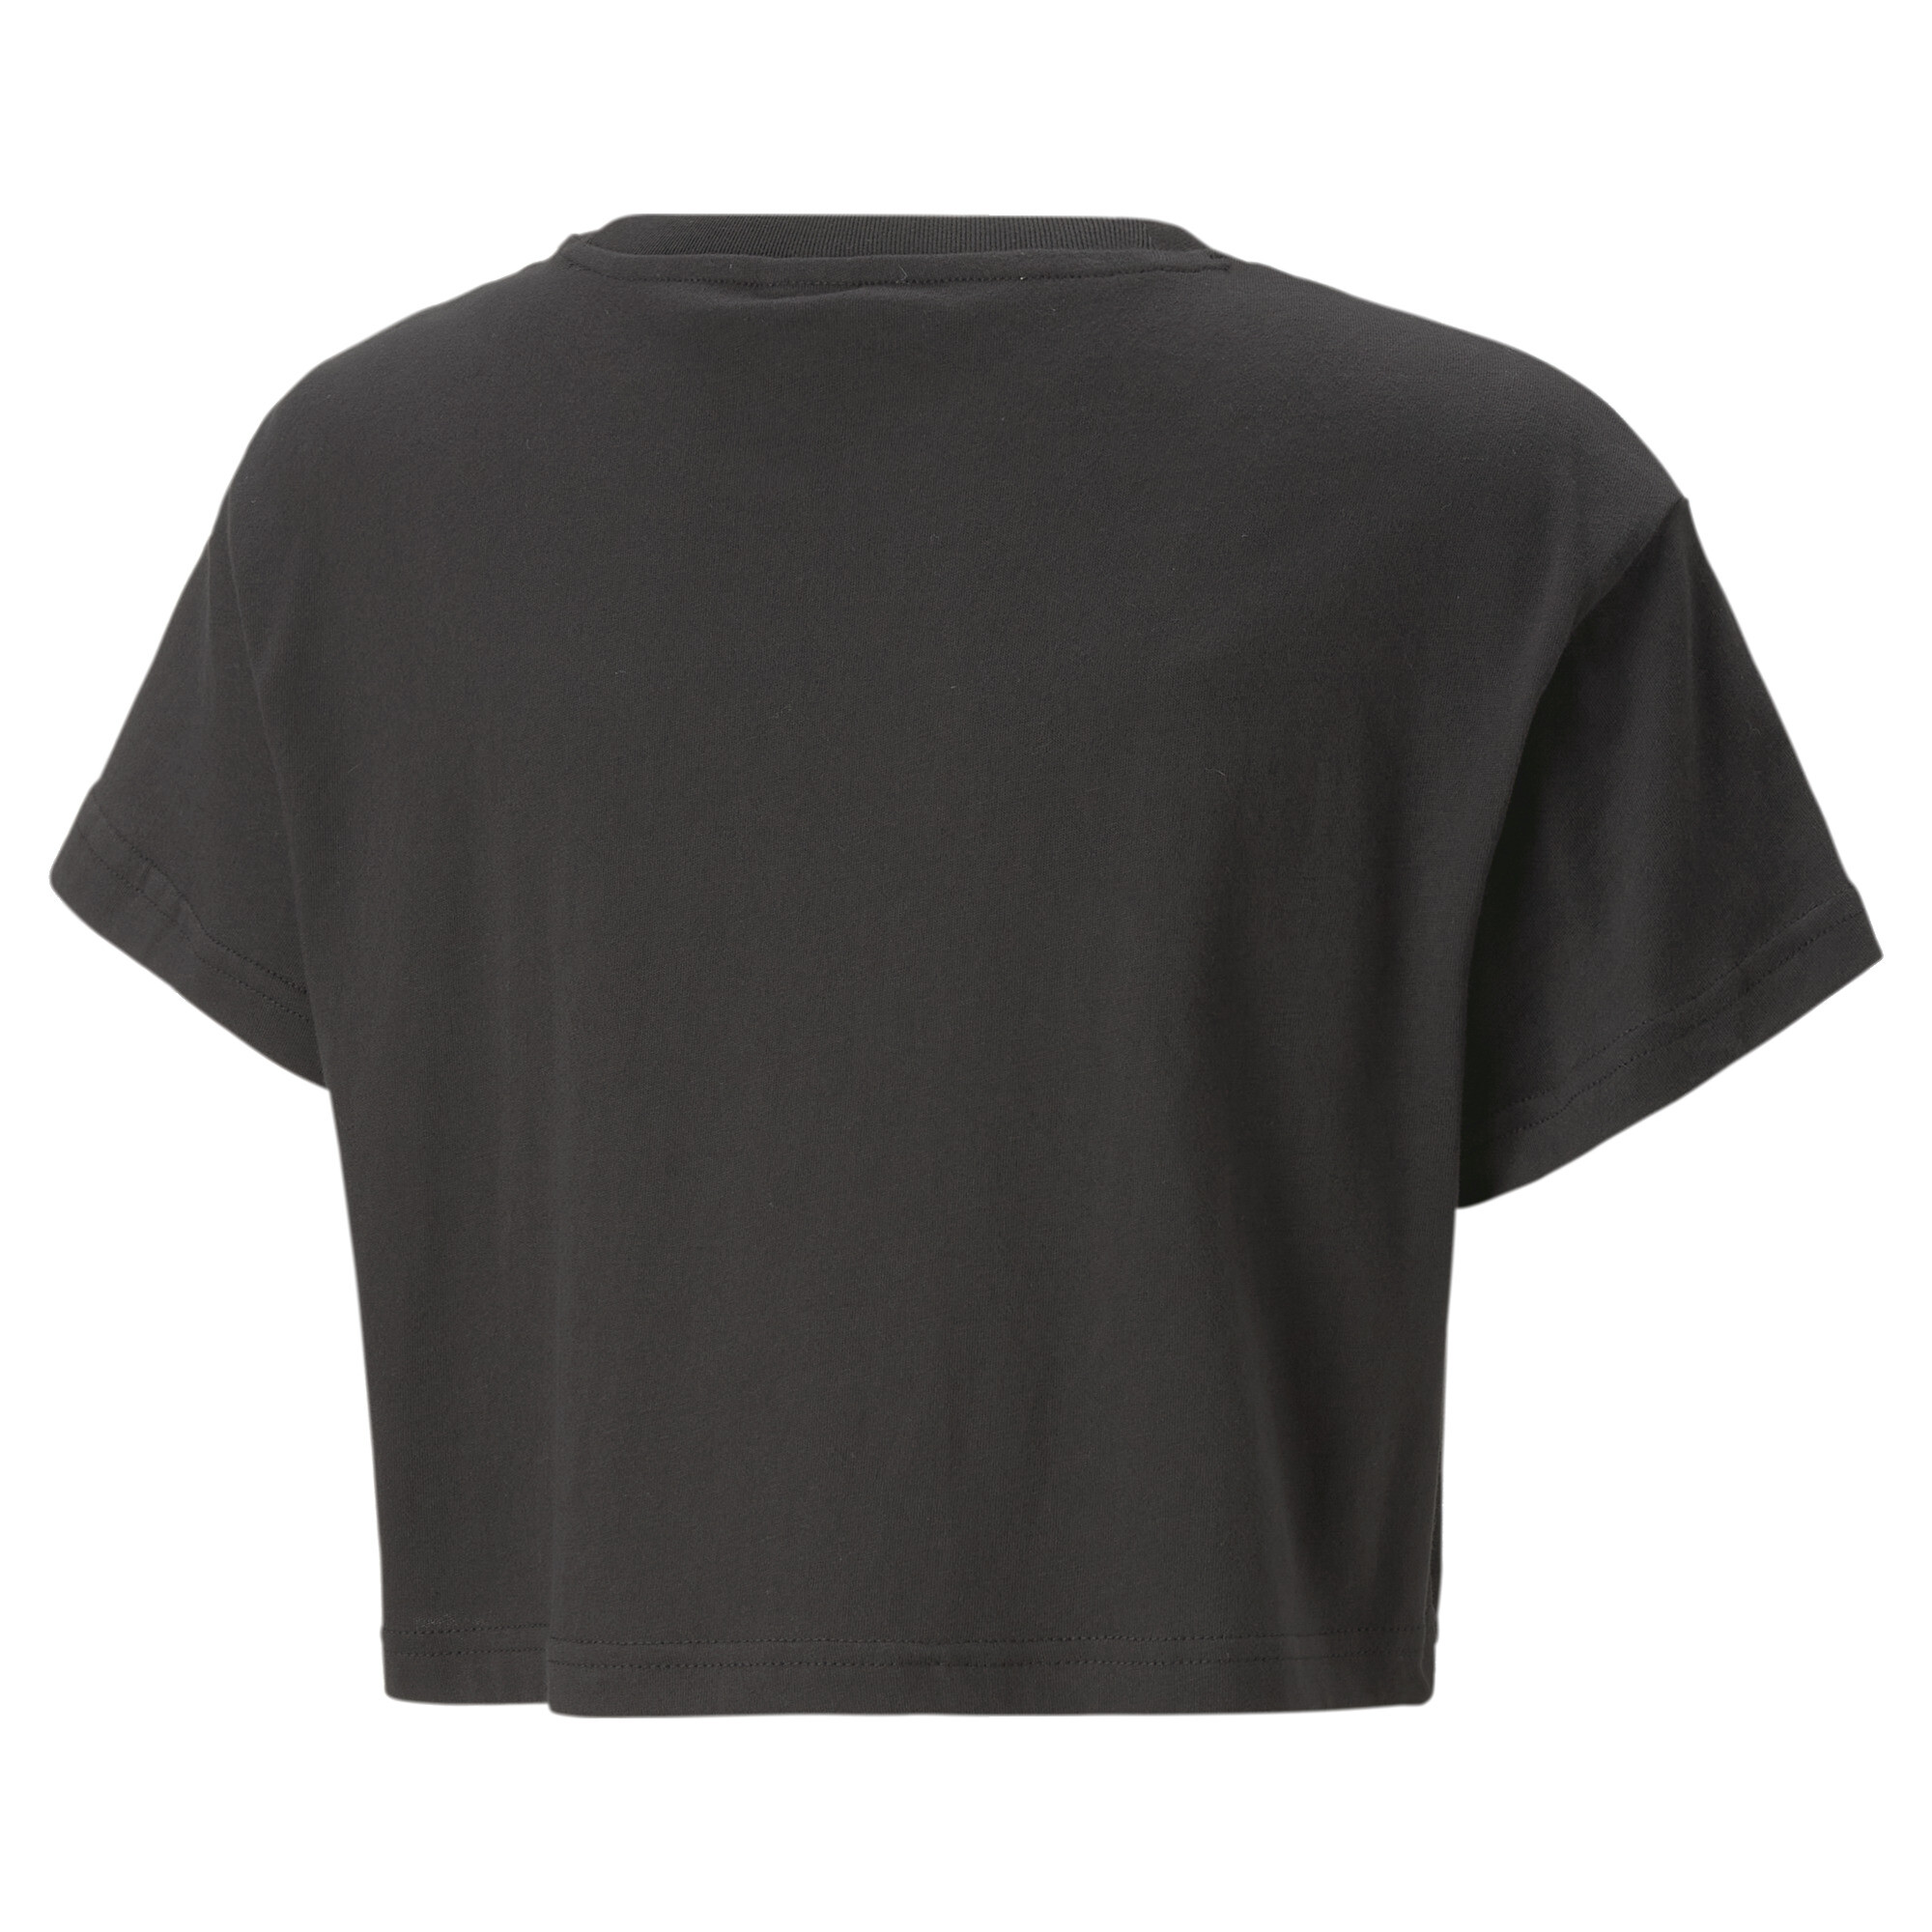 PUMA Classics T-Shirt In 10 - Black, Size 9-10 Youth